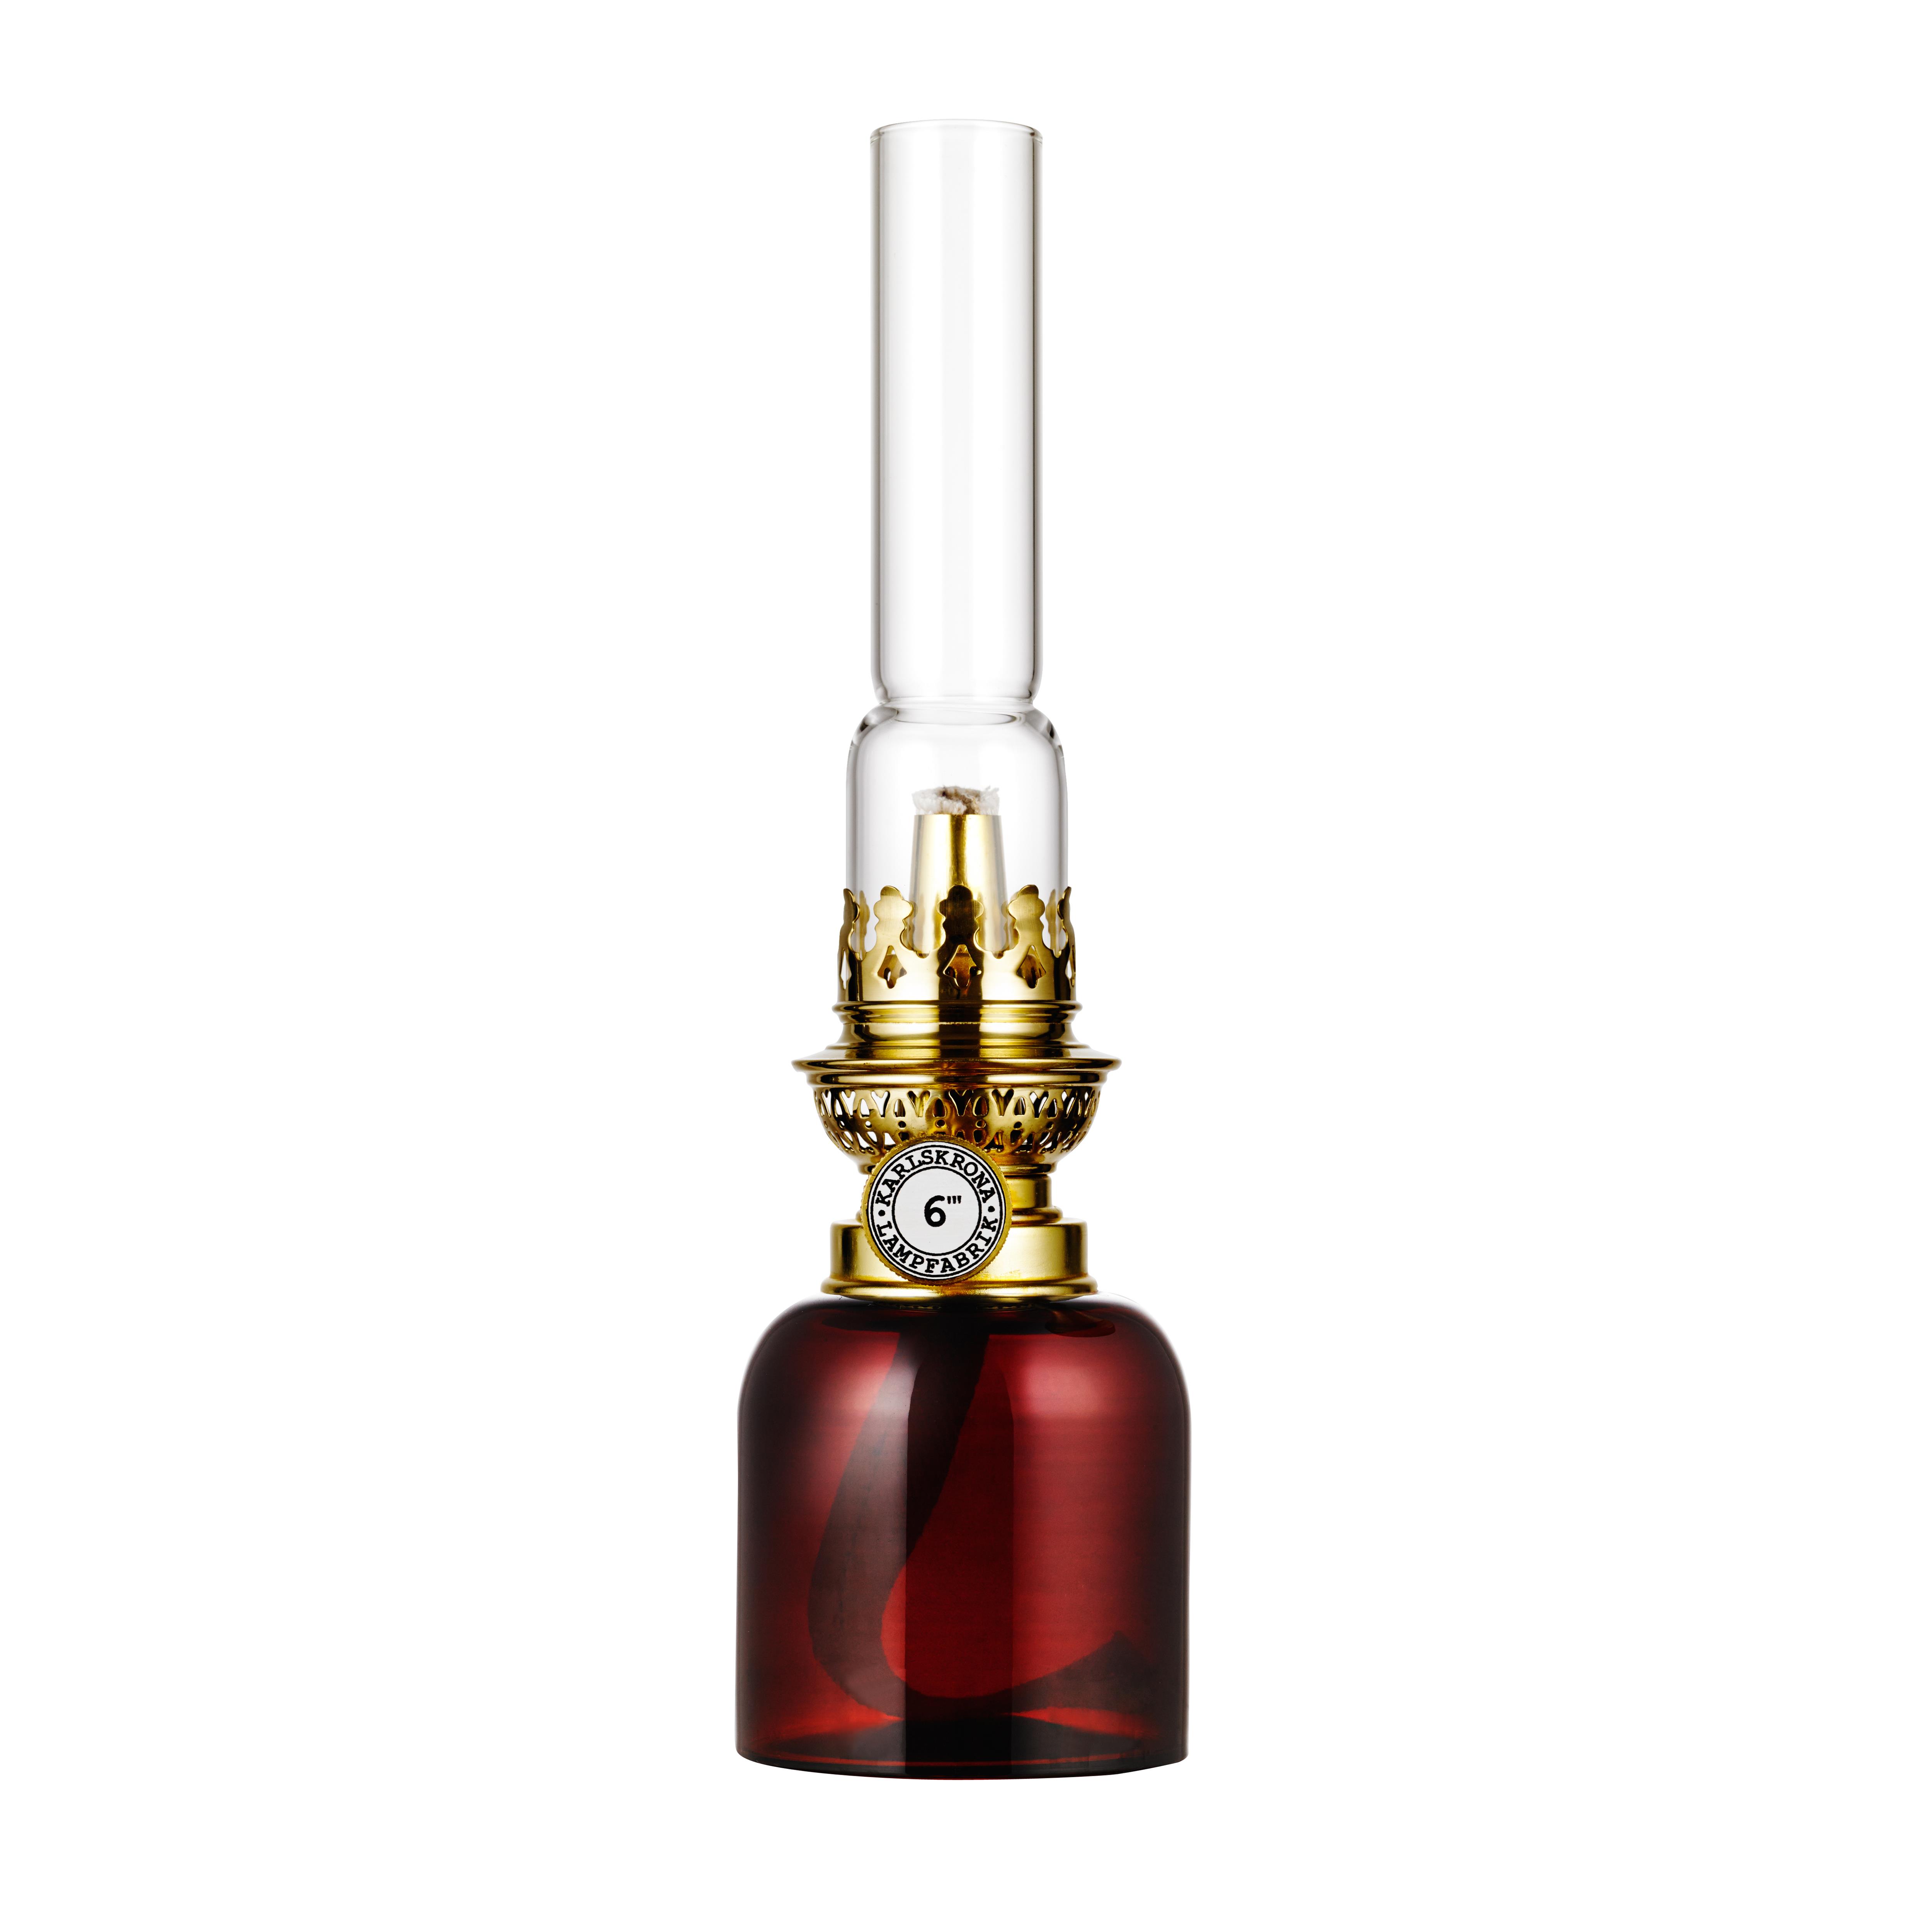 Brass oil lamp - Karlskrona Lampfabrik - Homeware - Shop